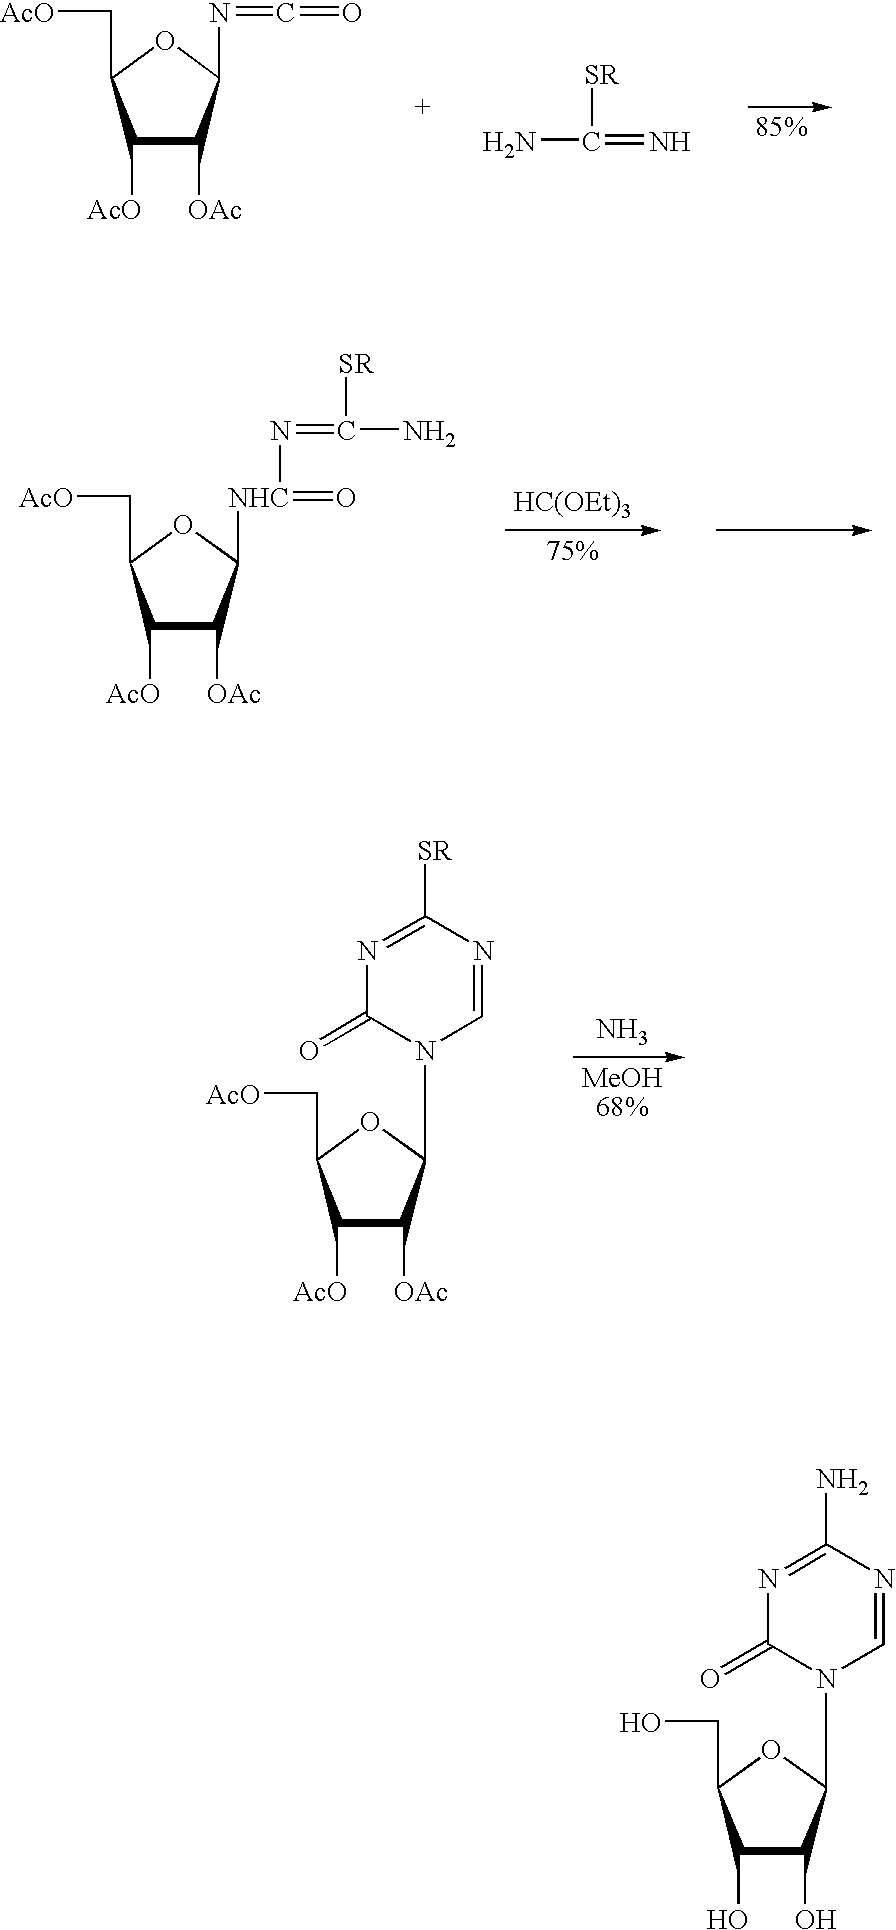 Synthesis of 5-azacytidine